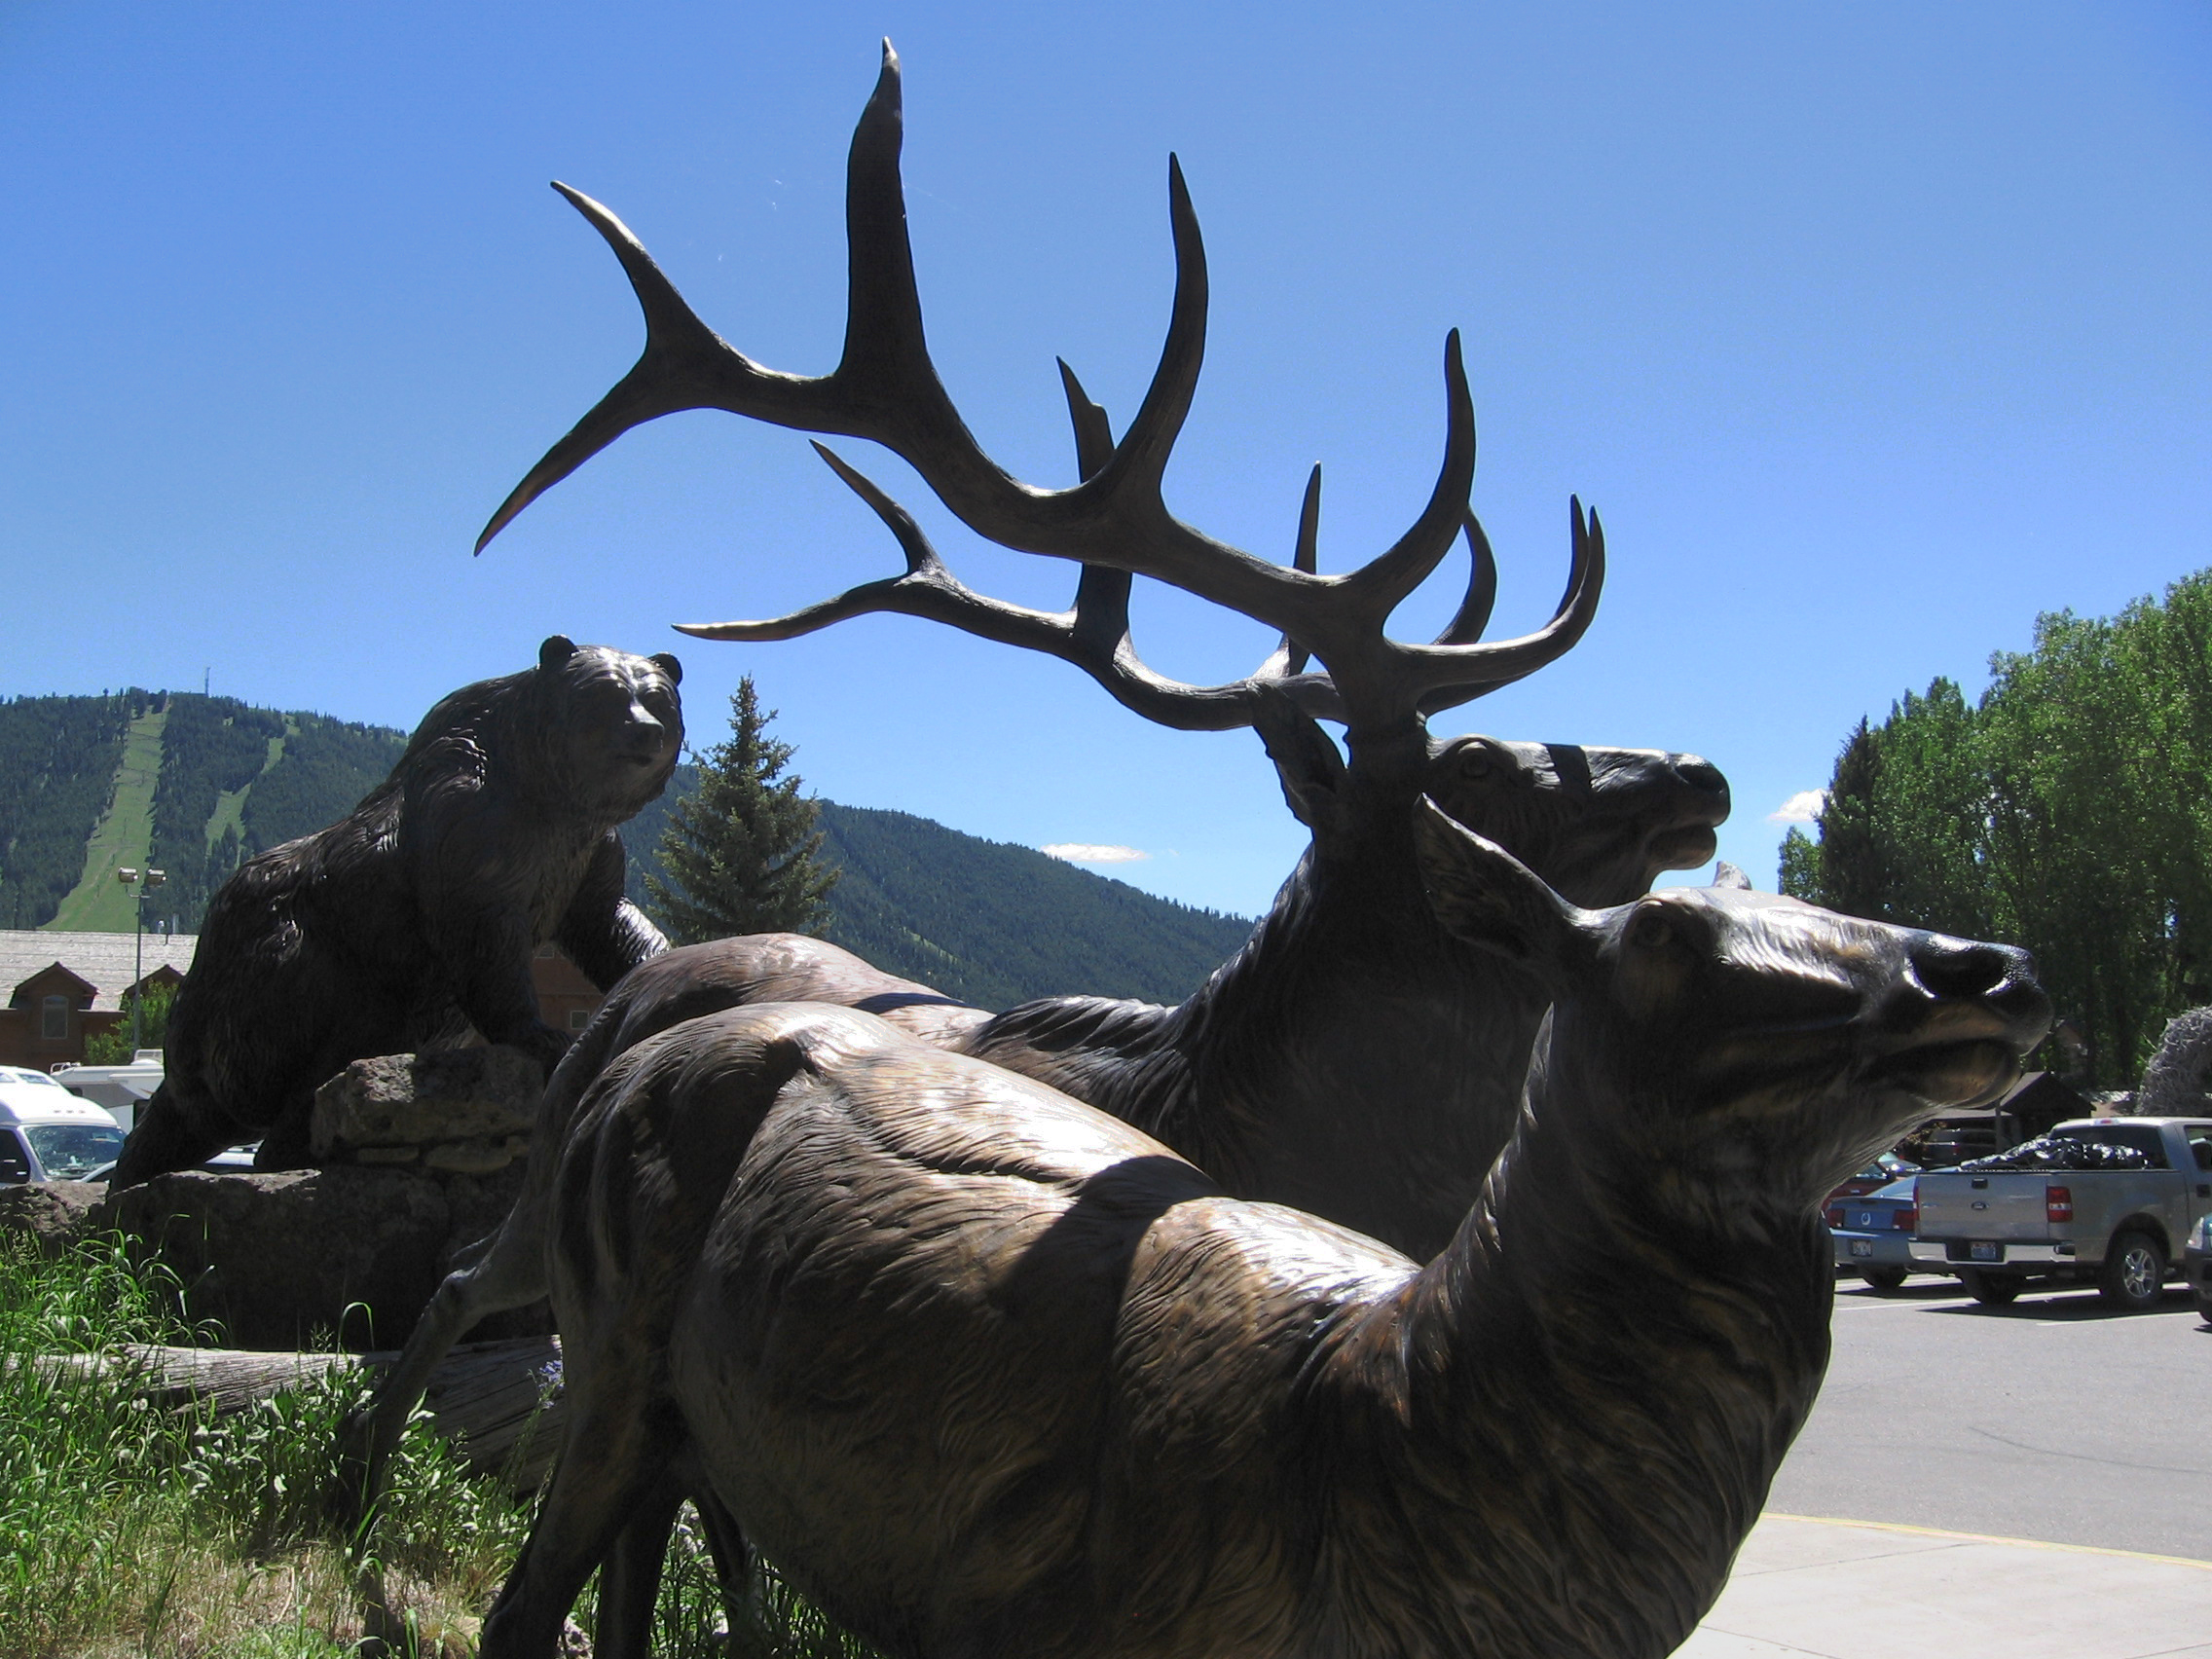 Jackson Hole & Greater Yellowstone Visitor Center